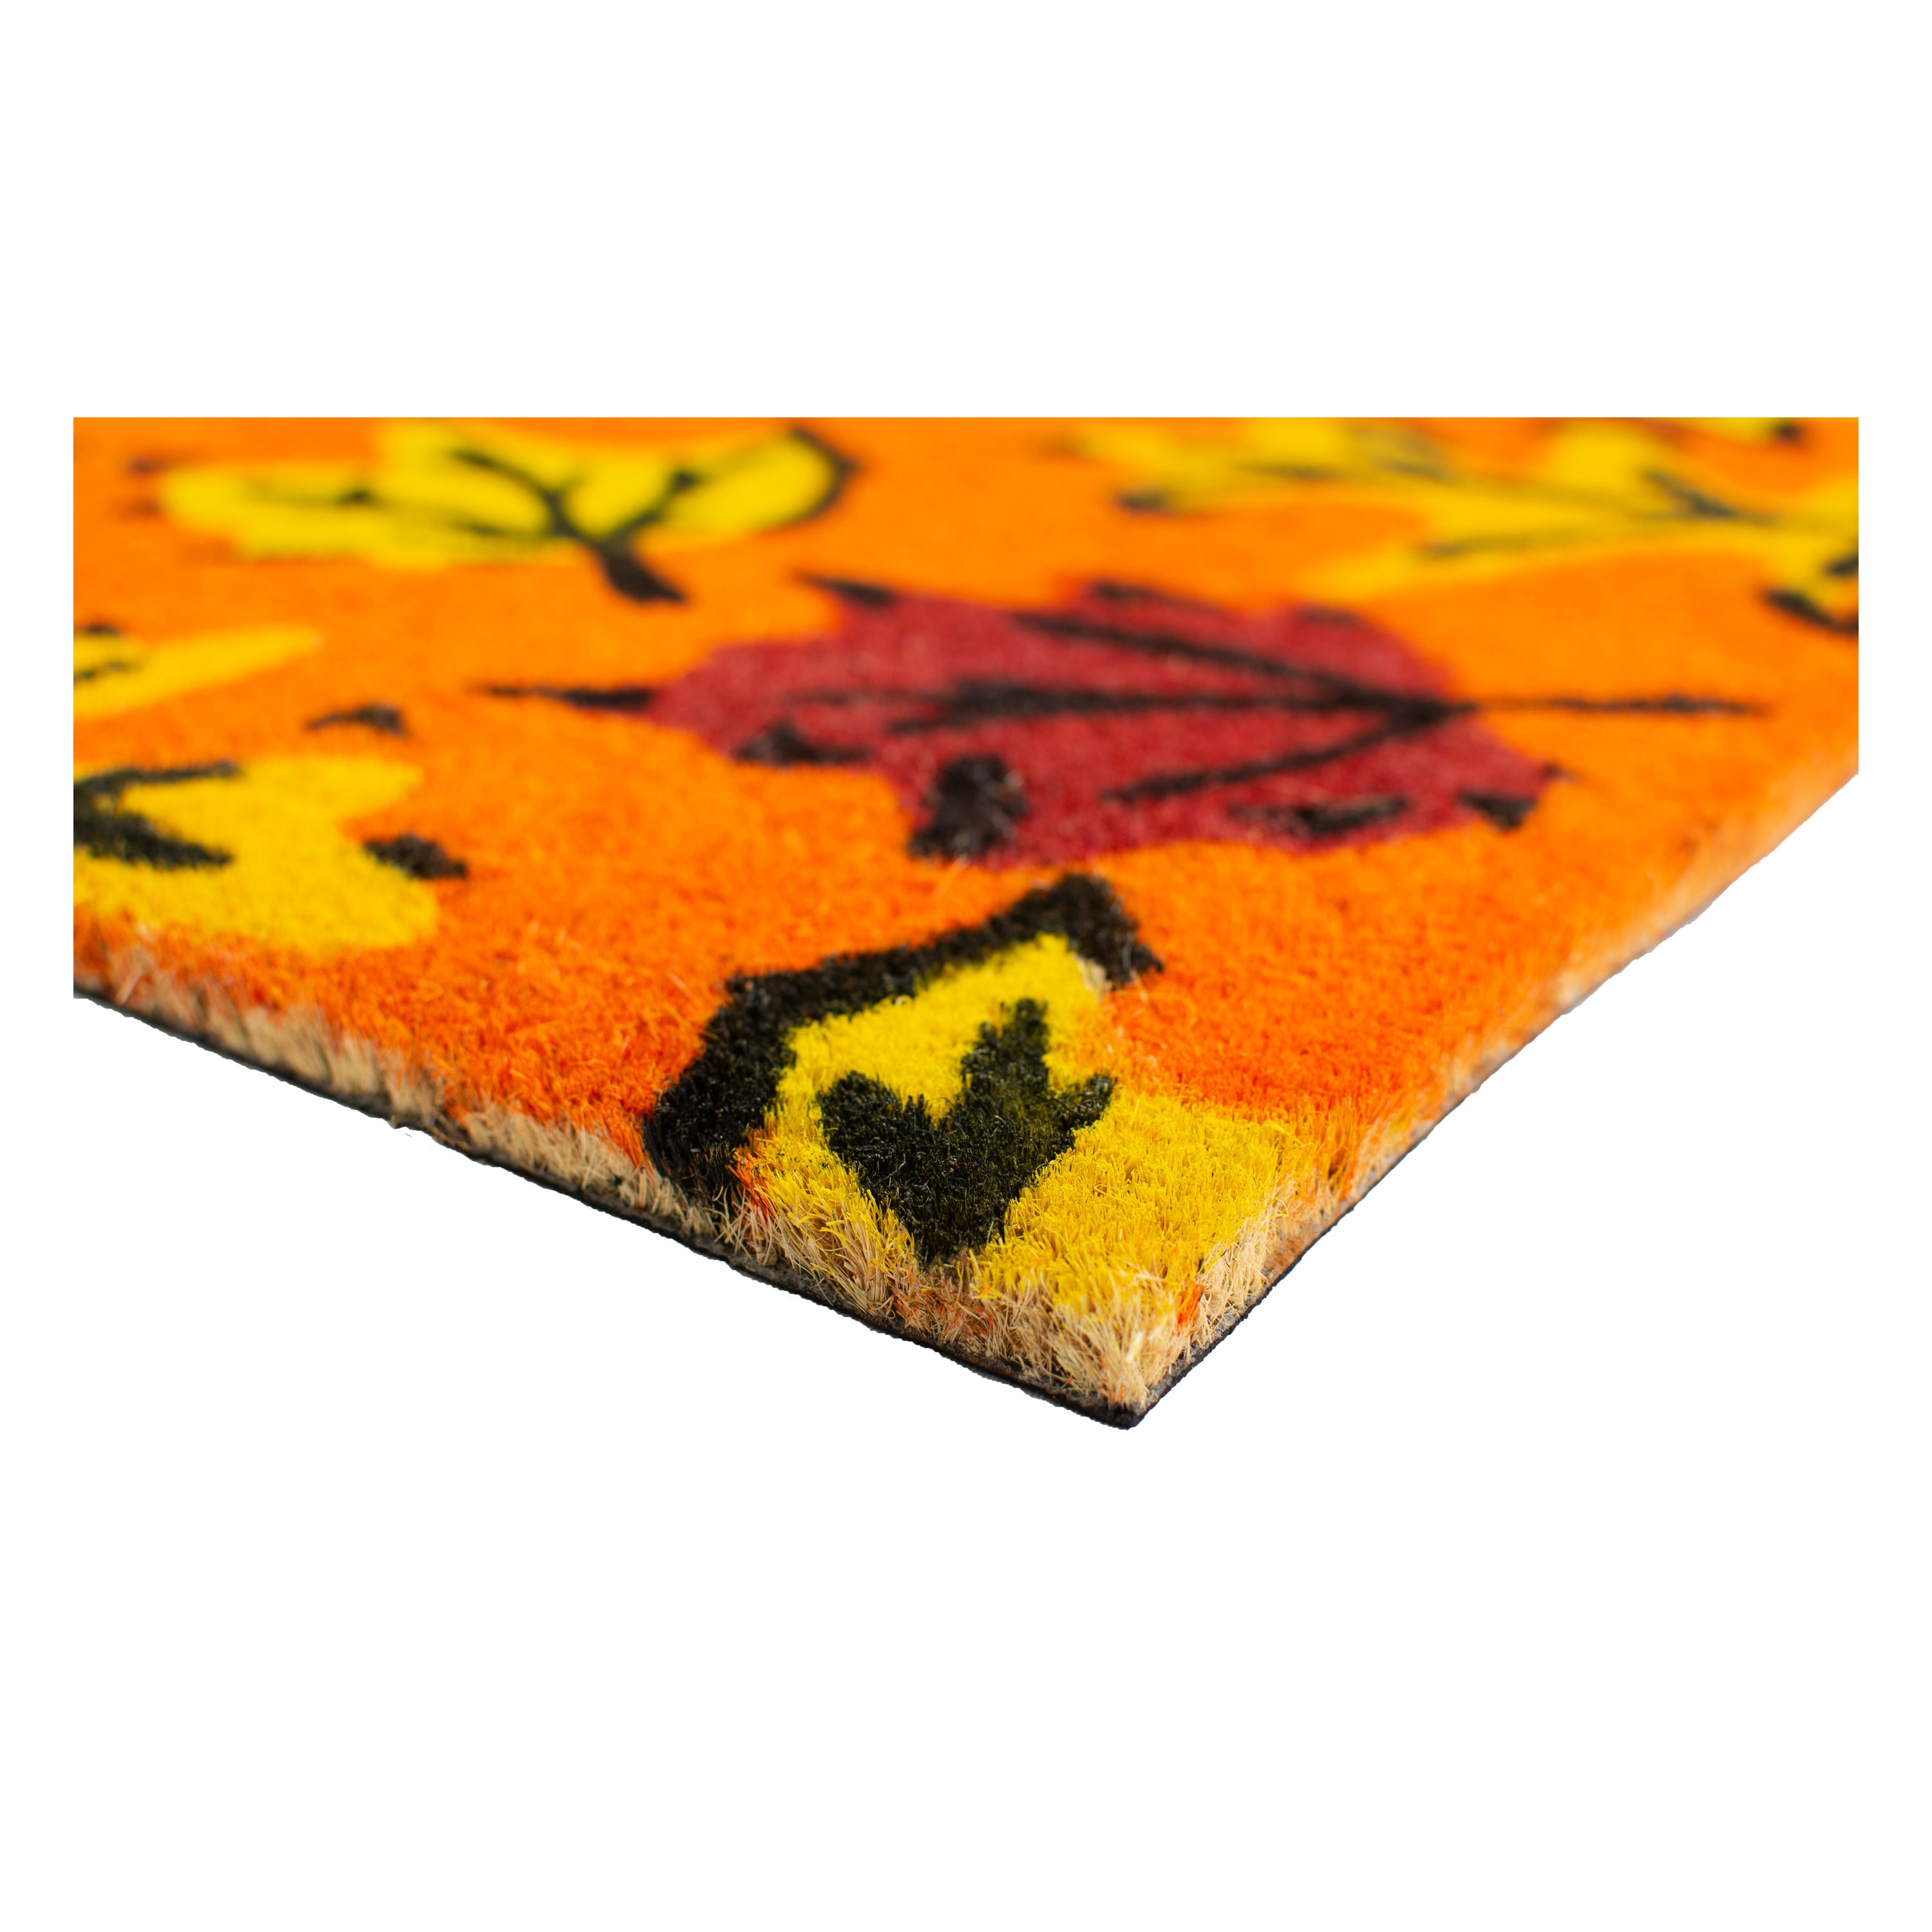 17 x 29 Calloway Mills 120961729 Fall Leaves Doormat Multicolor